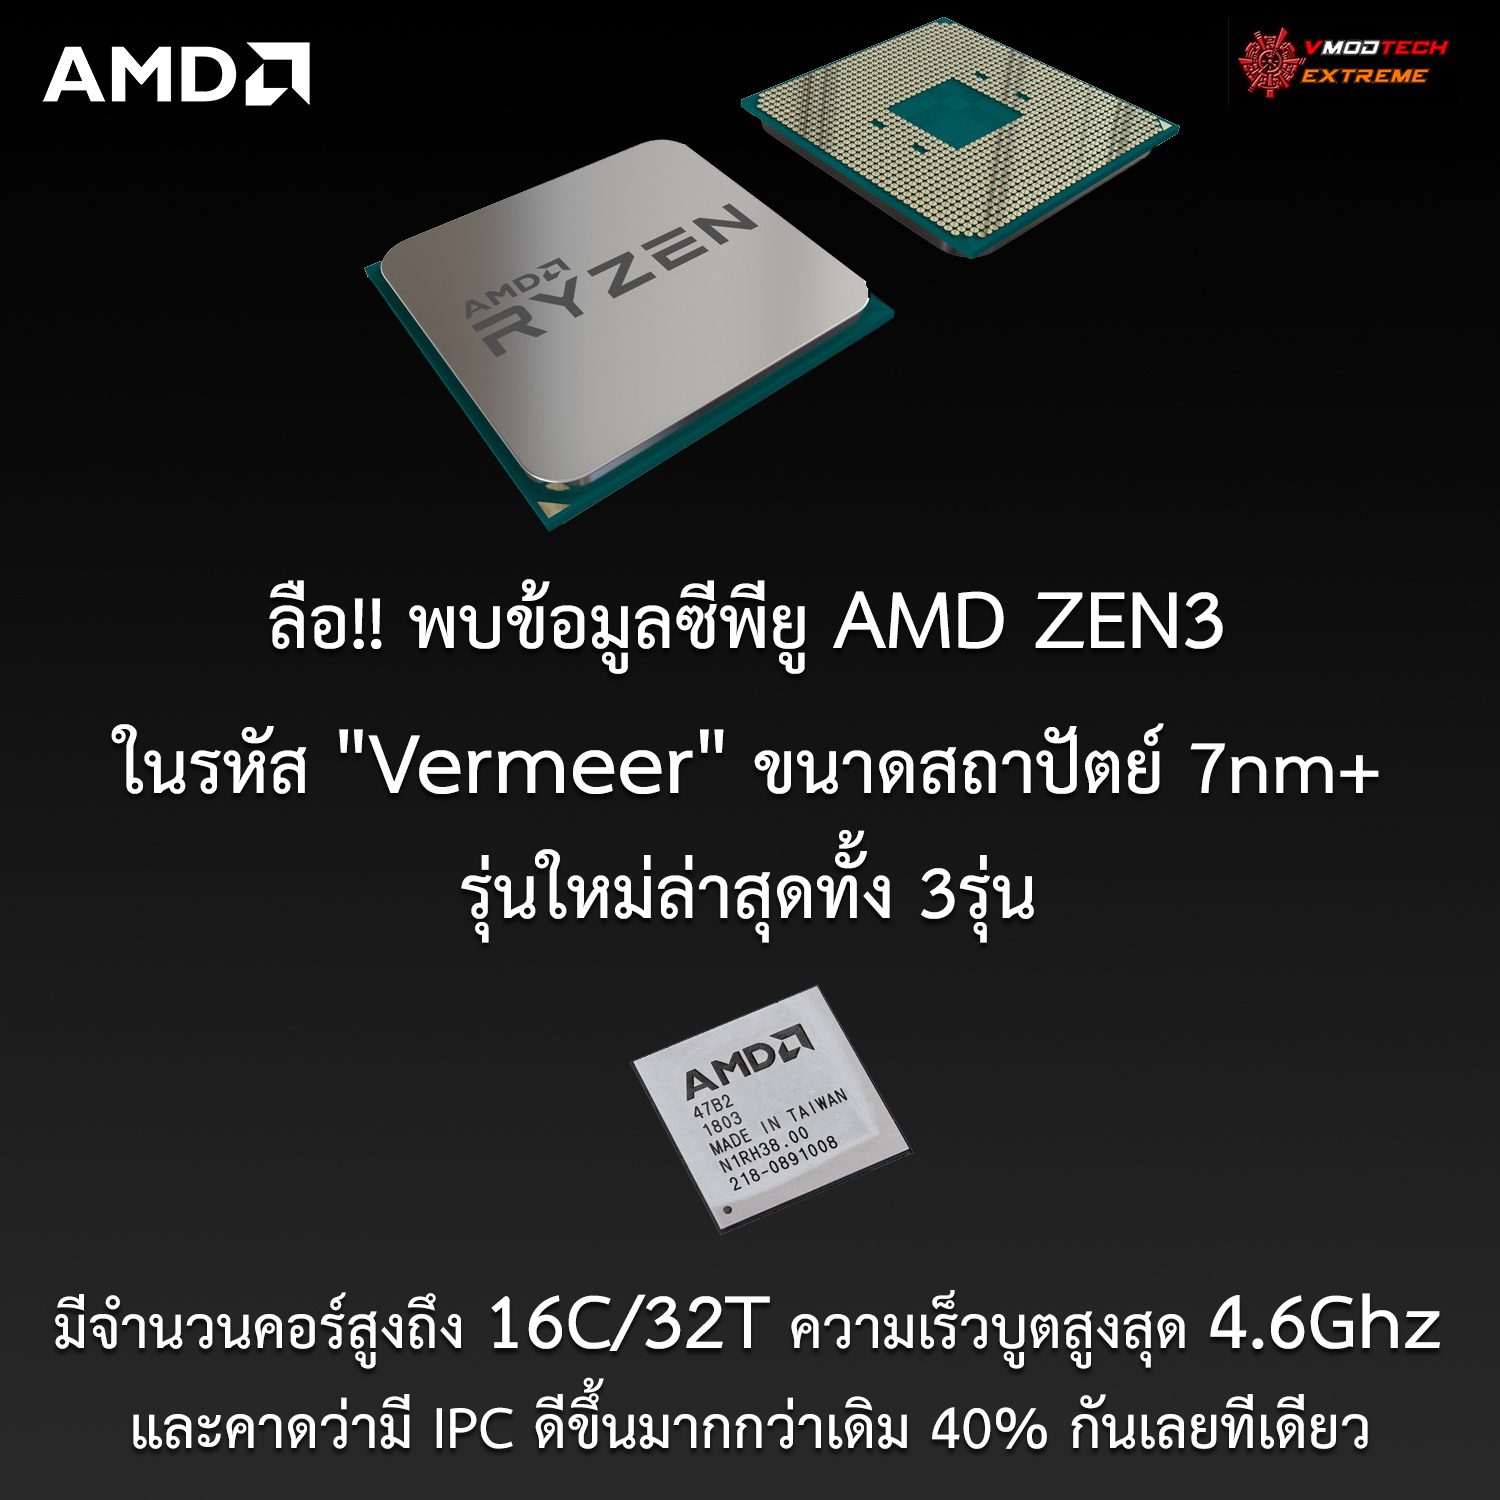 amd zen3 vermeer ลือ!! พบข้อมูลซีพียู AMD ZEN3 ในรหัส Vermeer รุ่นใหม่ล่าสุดทั้ง 3รุ่น โดยมีจำนวนคอร์ 16C/32T มีความเร็วบูตสูงสุด 4.6Ghz และคาดว่ามี IPC ดีขึ้นมากกว่าเดิม 40% กันเลยทีเดียว 